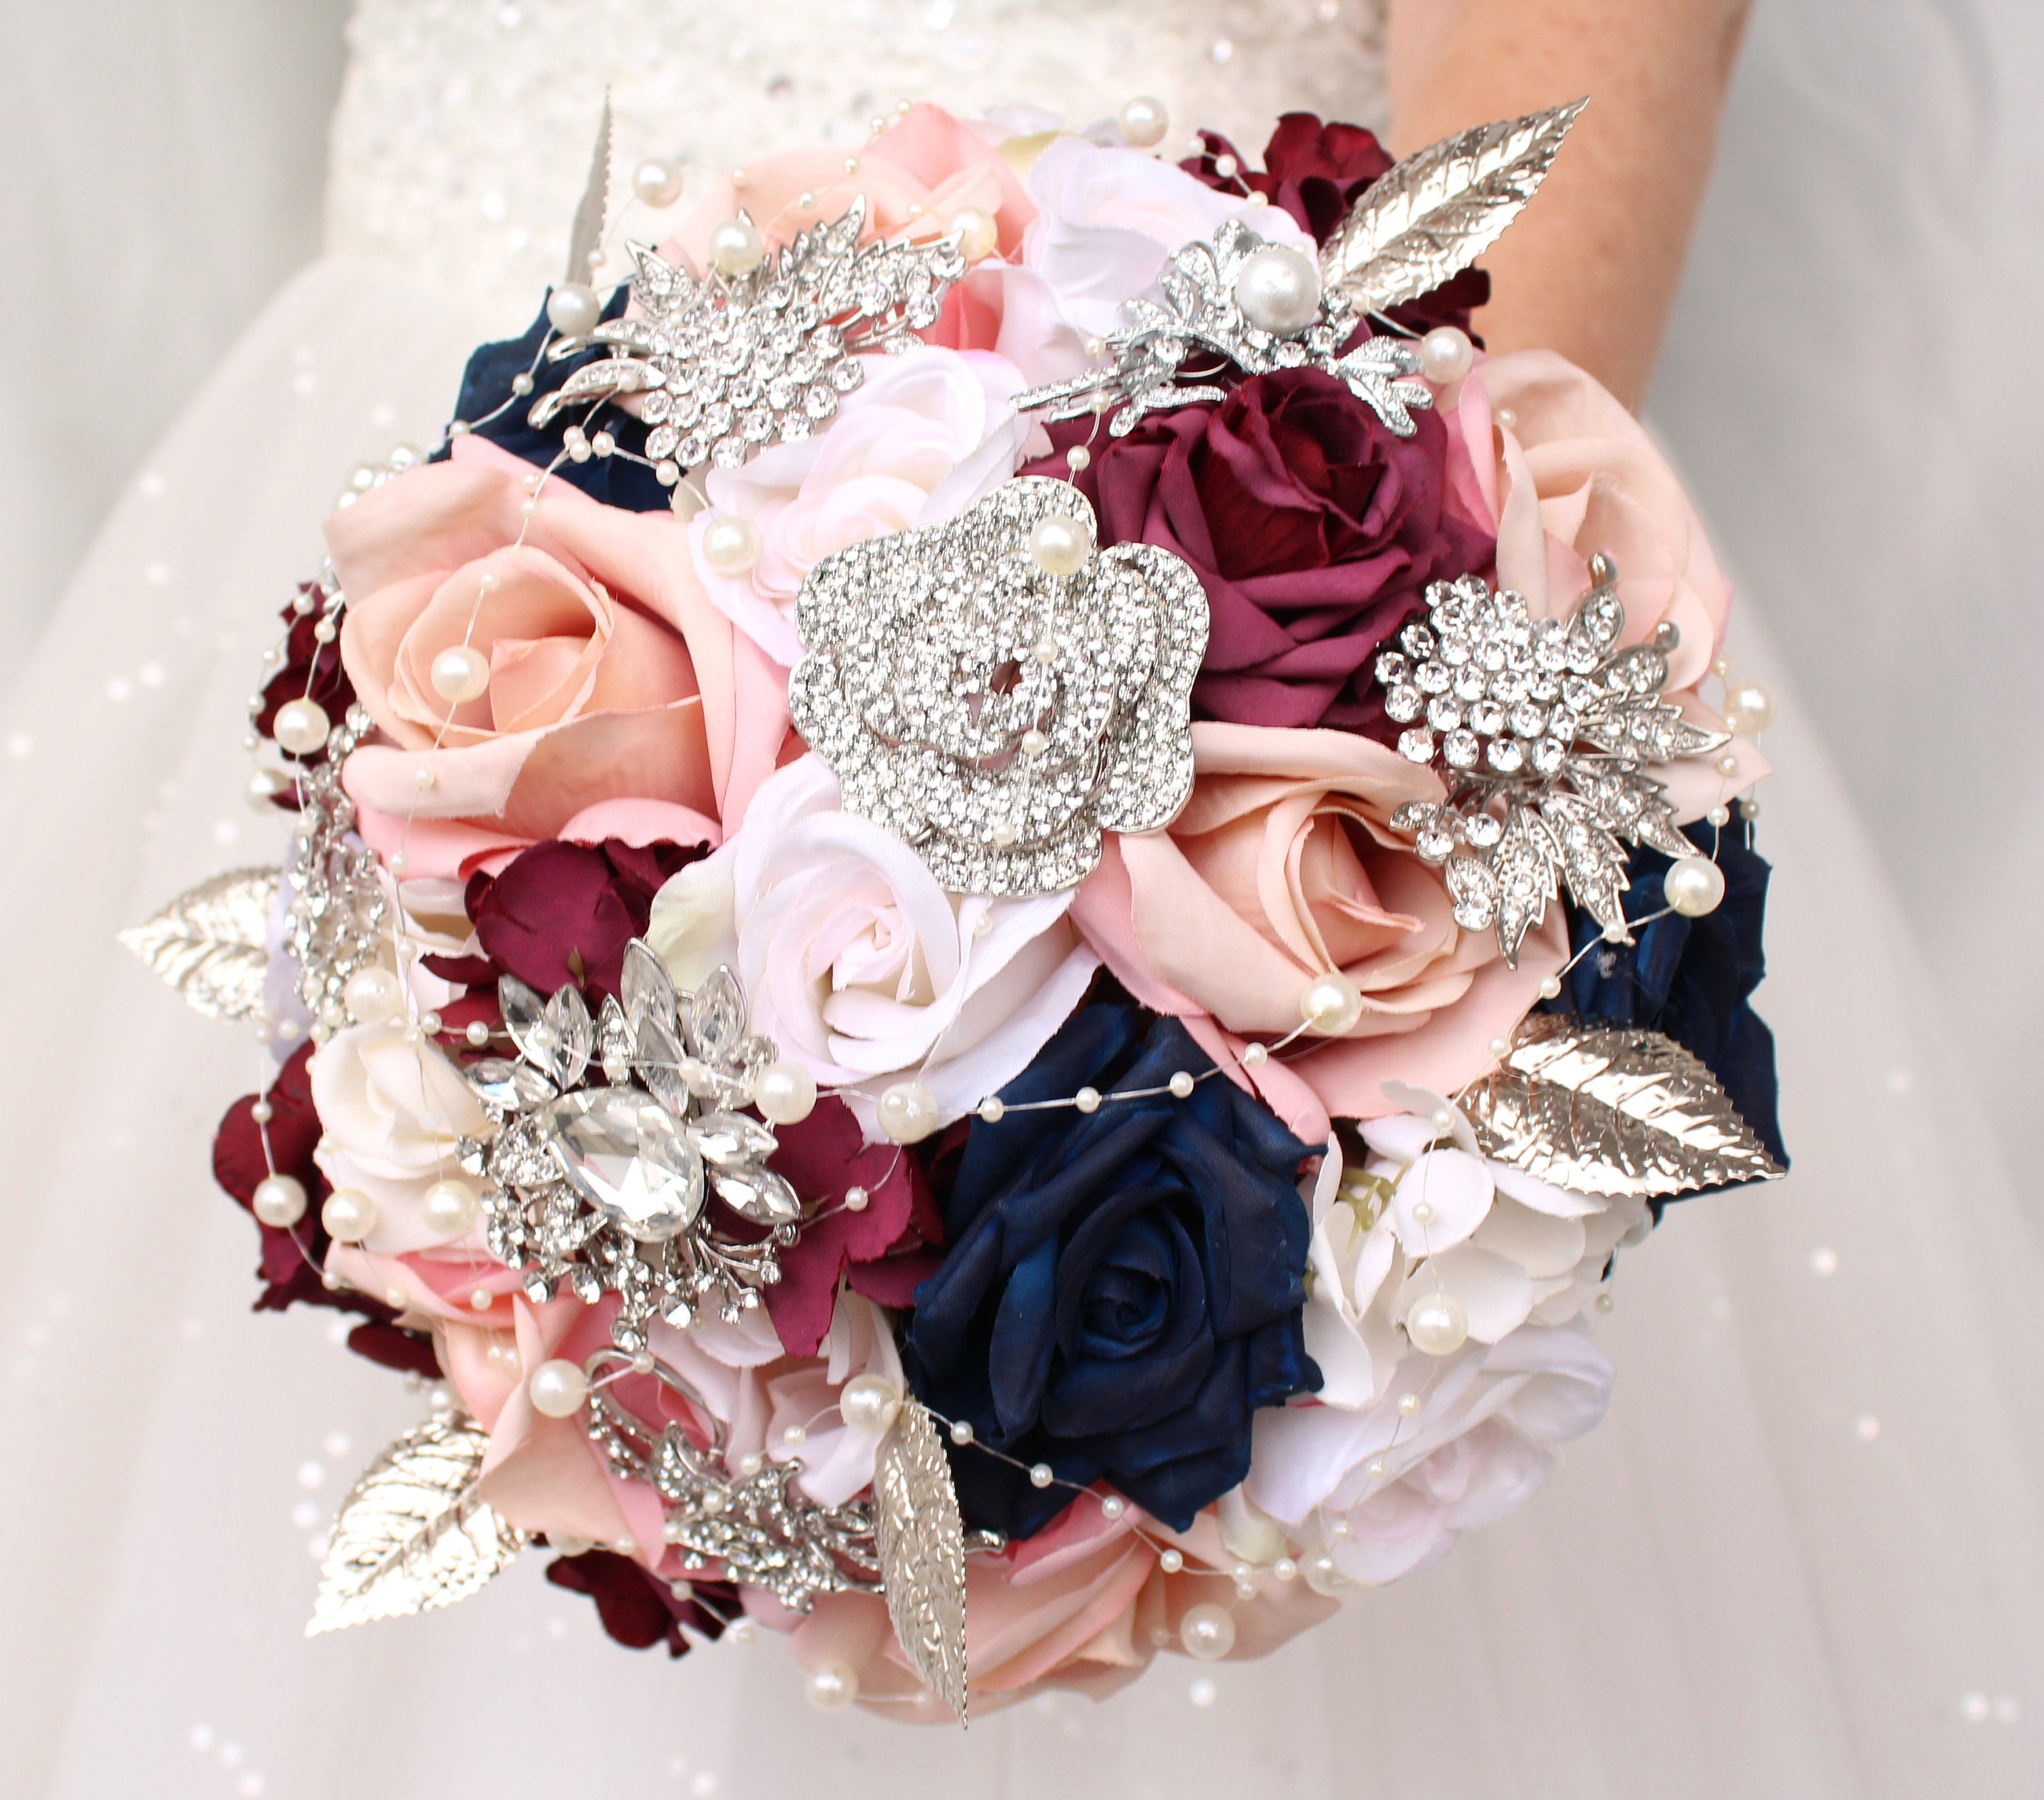 Silver Navy Blue Gold Theme Bridal Wedding Bouquet Accessories 